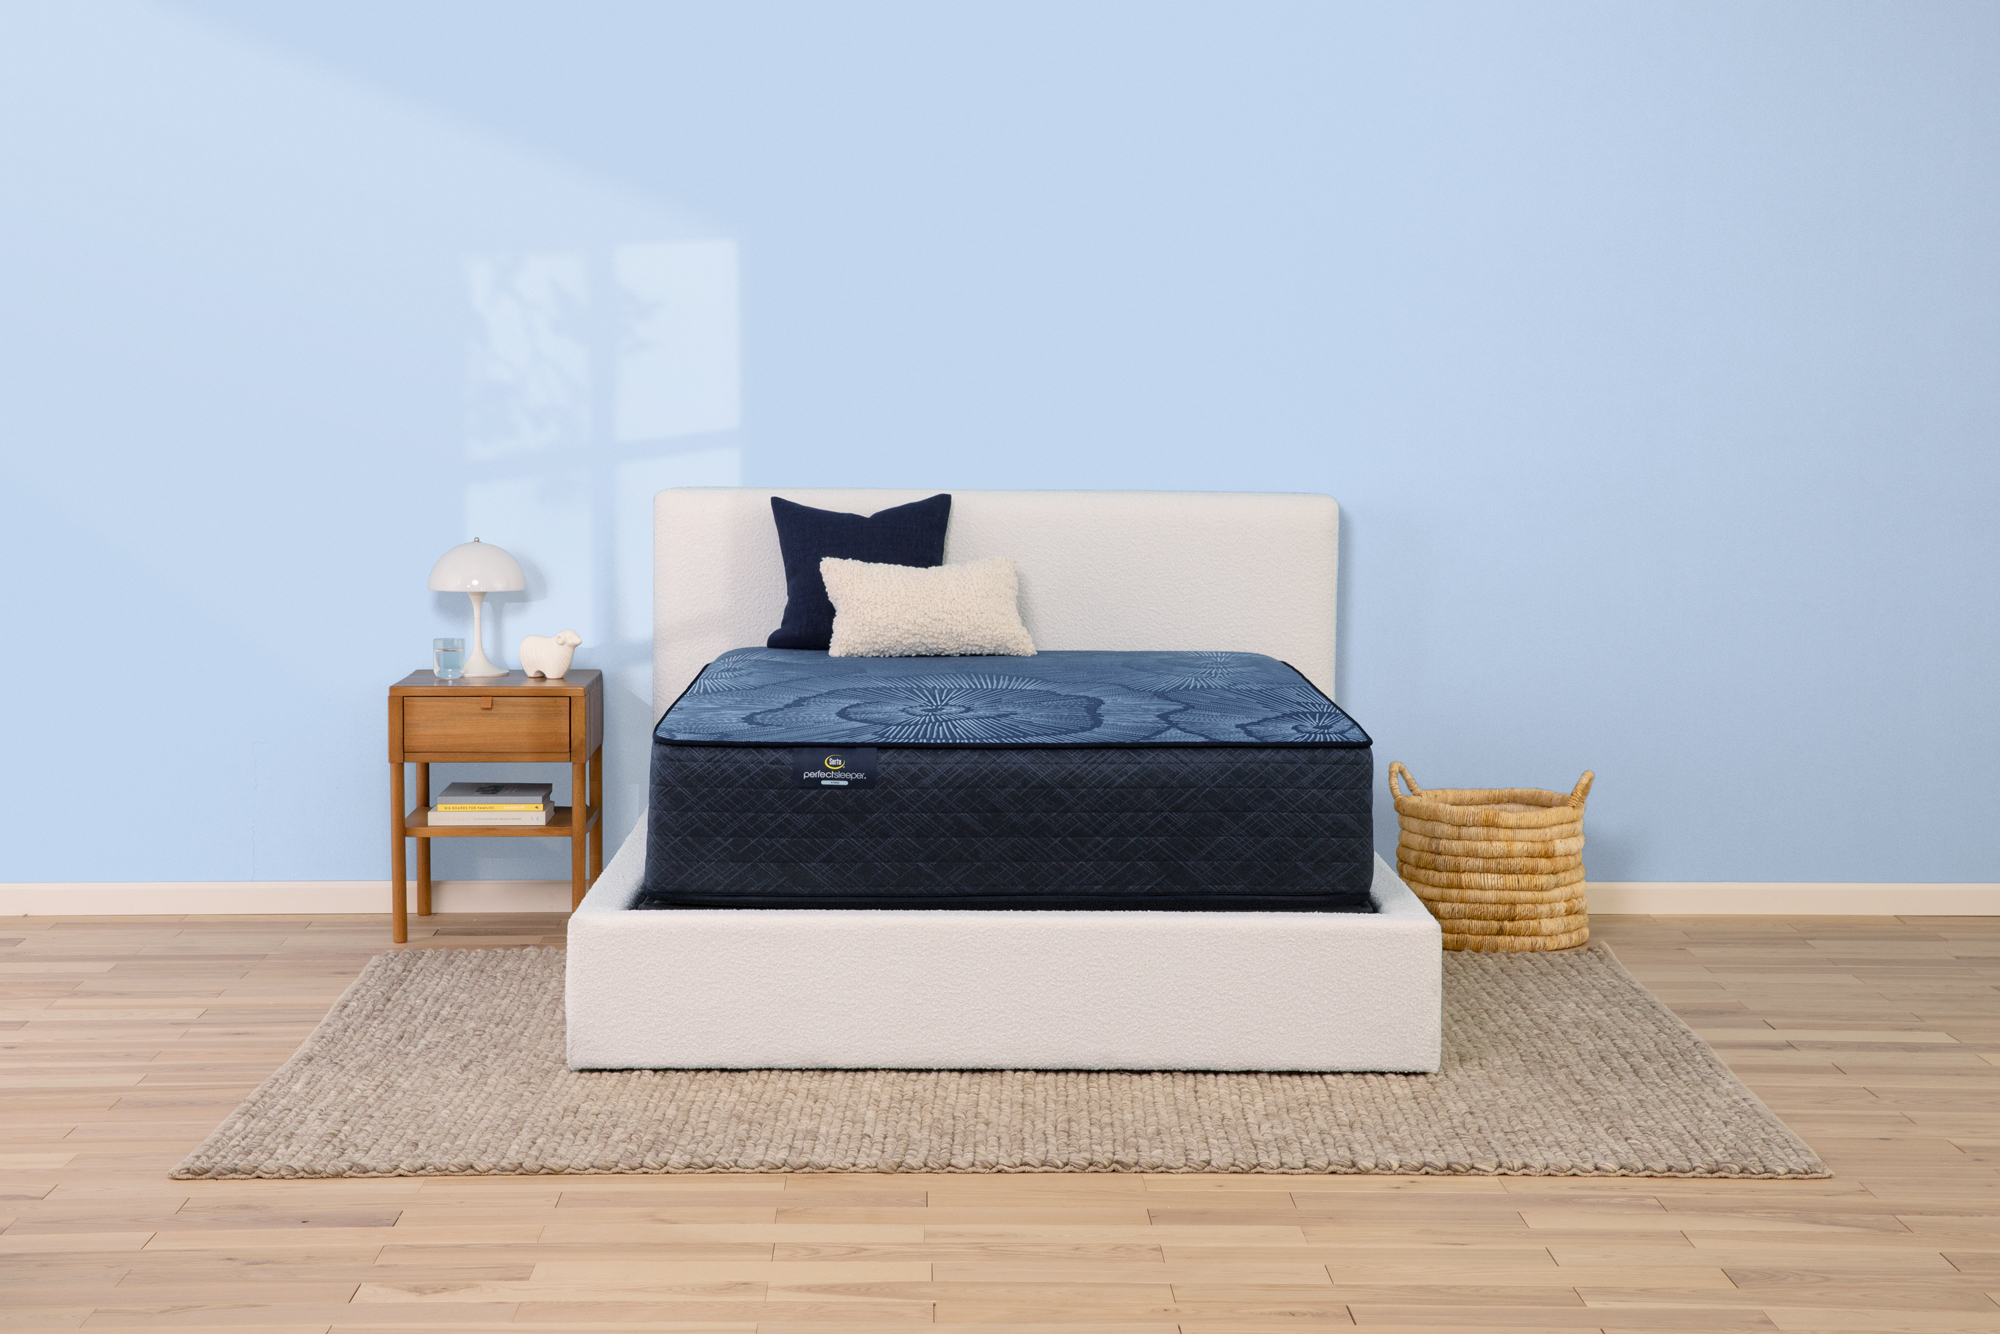 Photo of a Serta Perfect Sleeper Euphoric Nights Firm mattress.